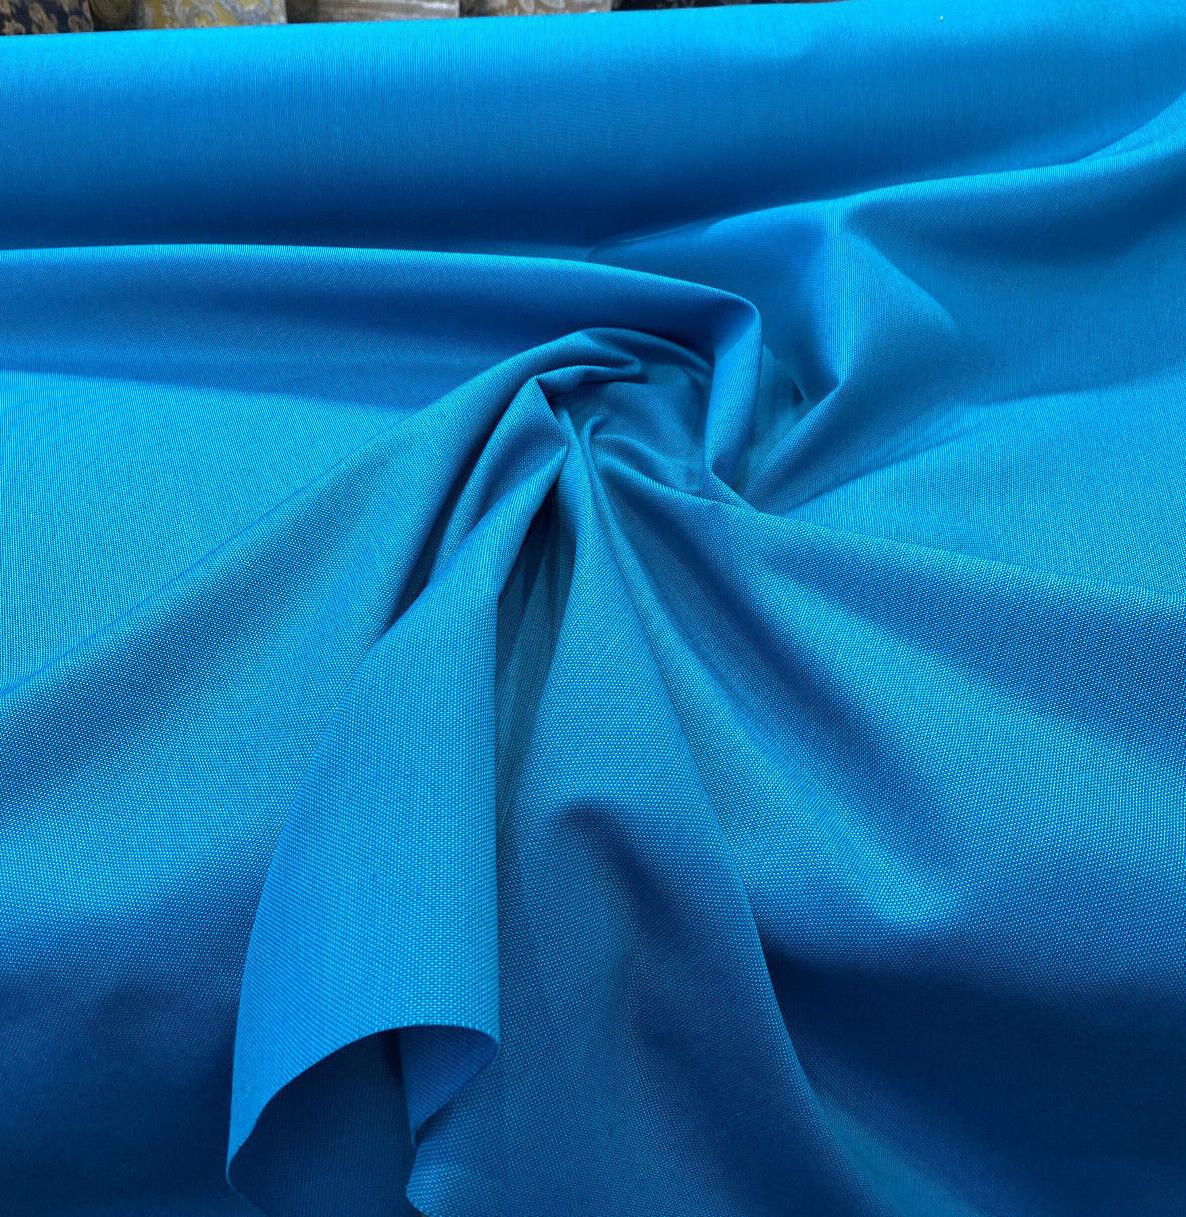 Sunbrella Fabric Samples 